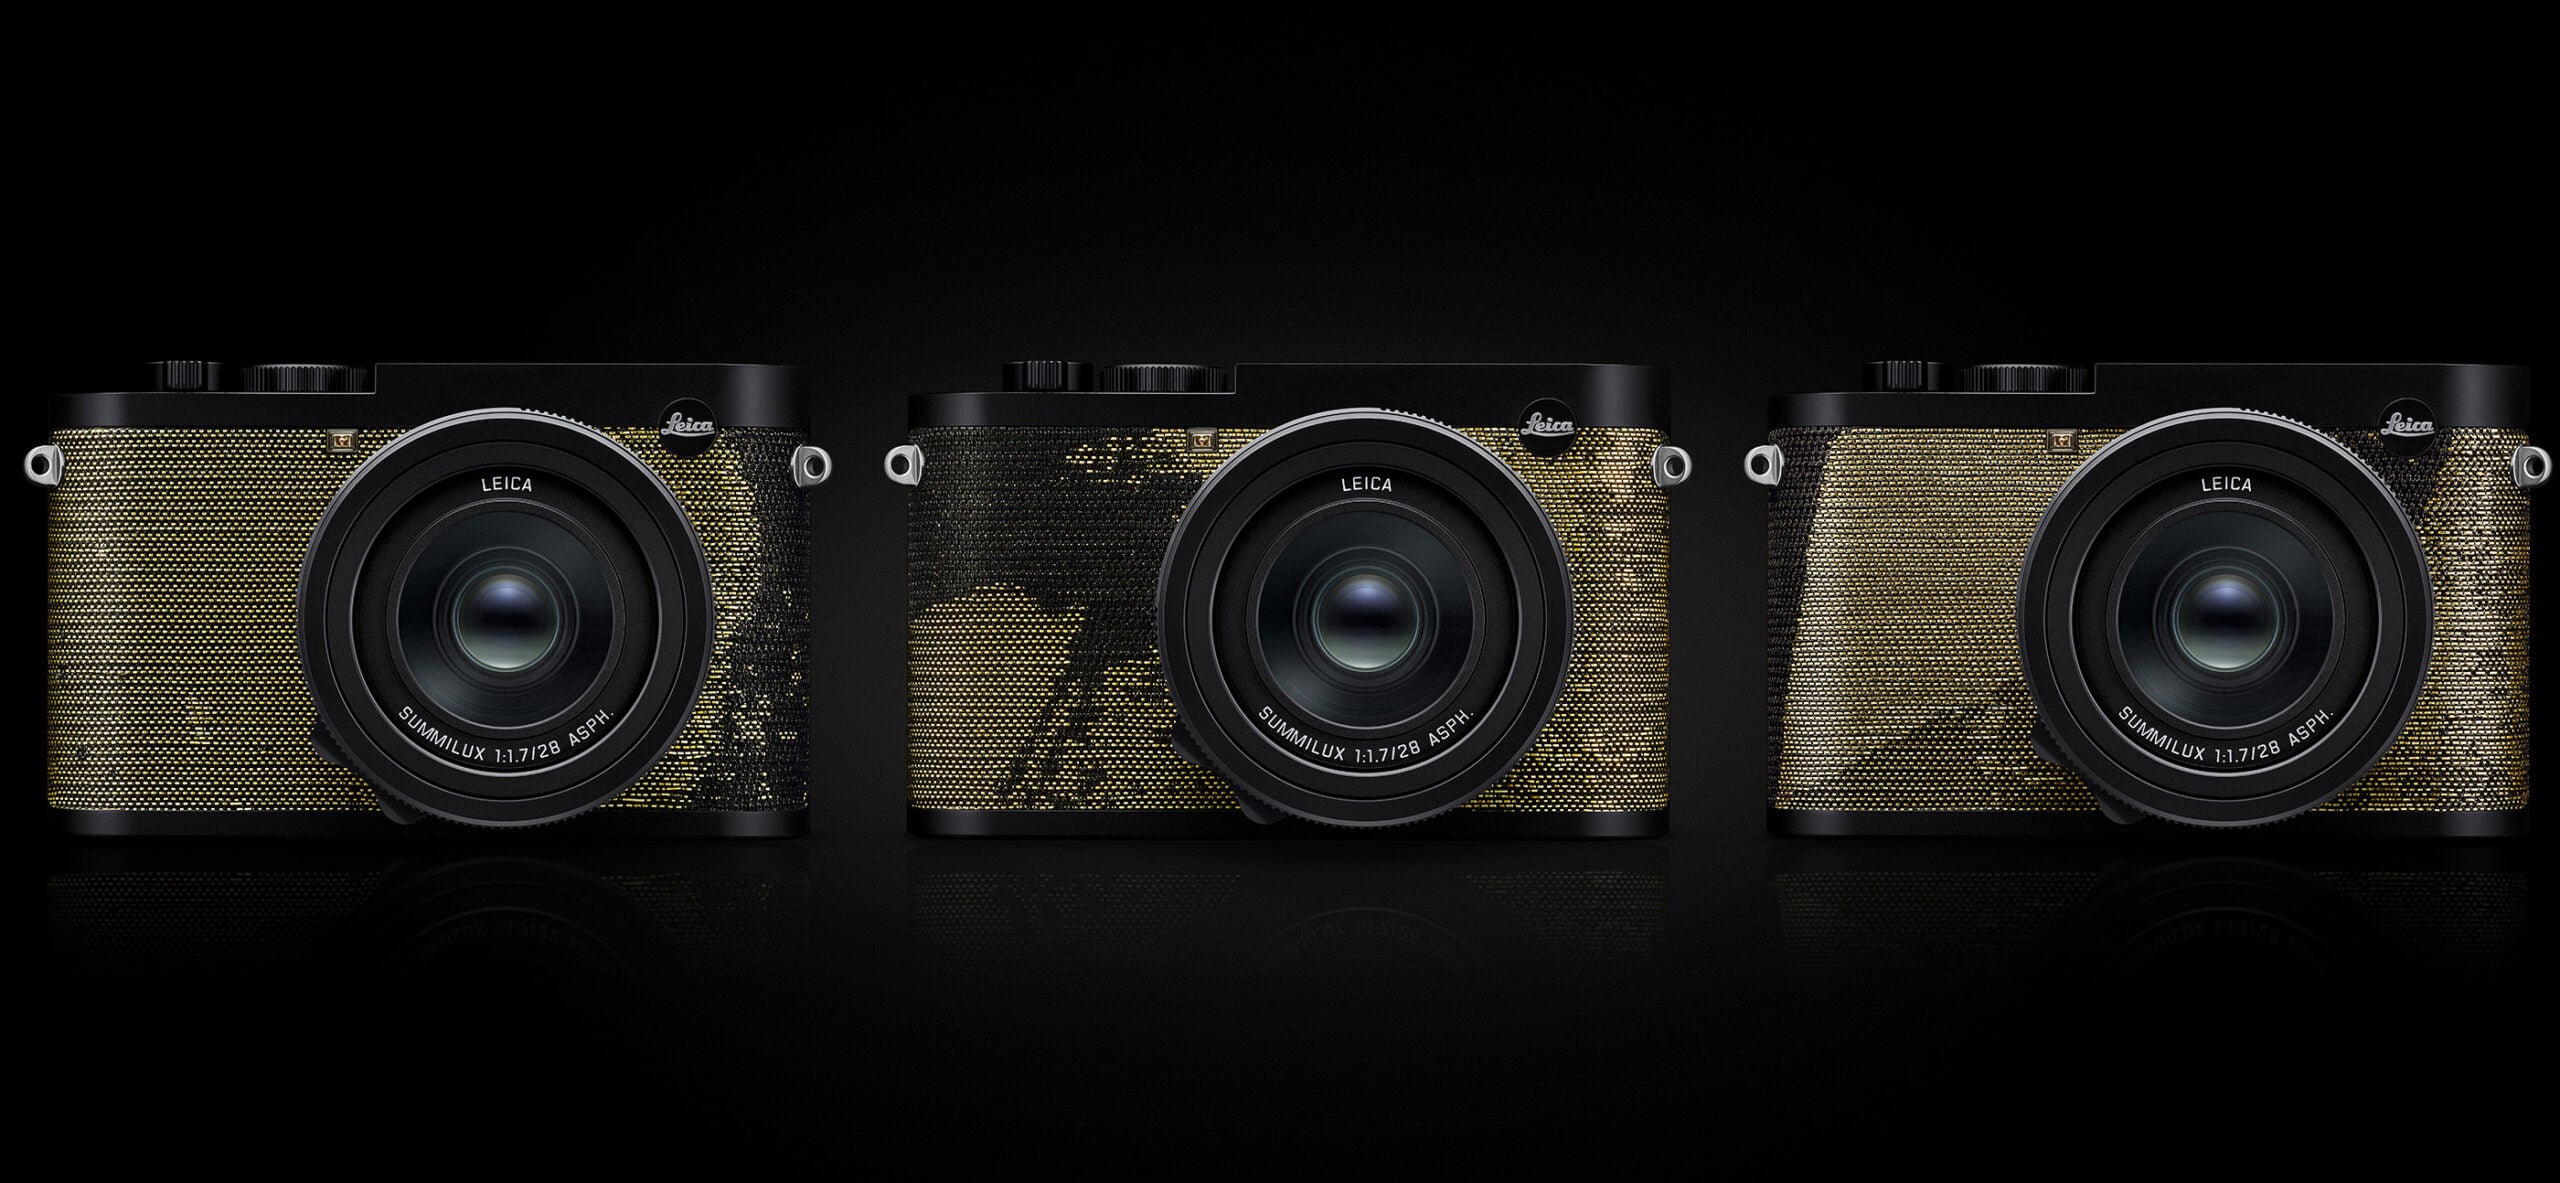 The Leica Q2 "dusk" by seal